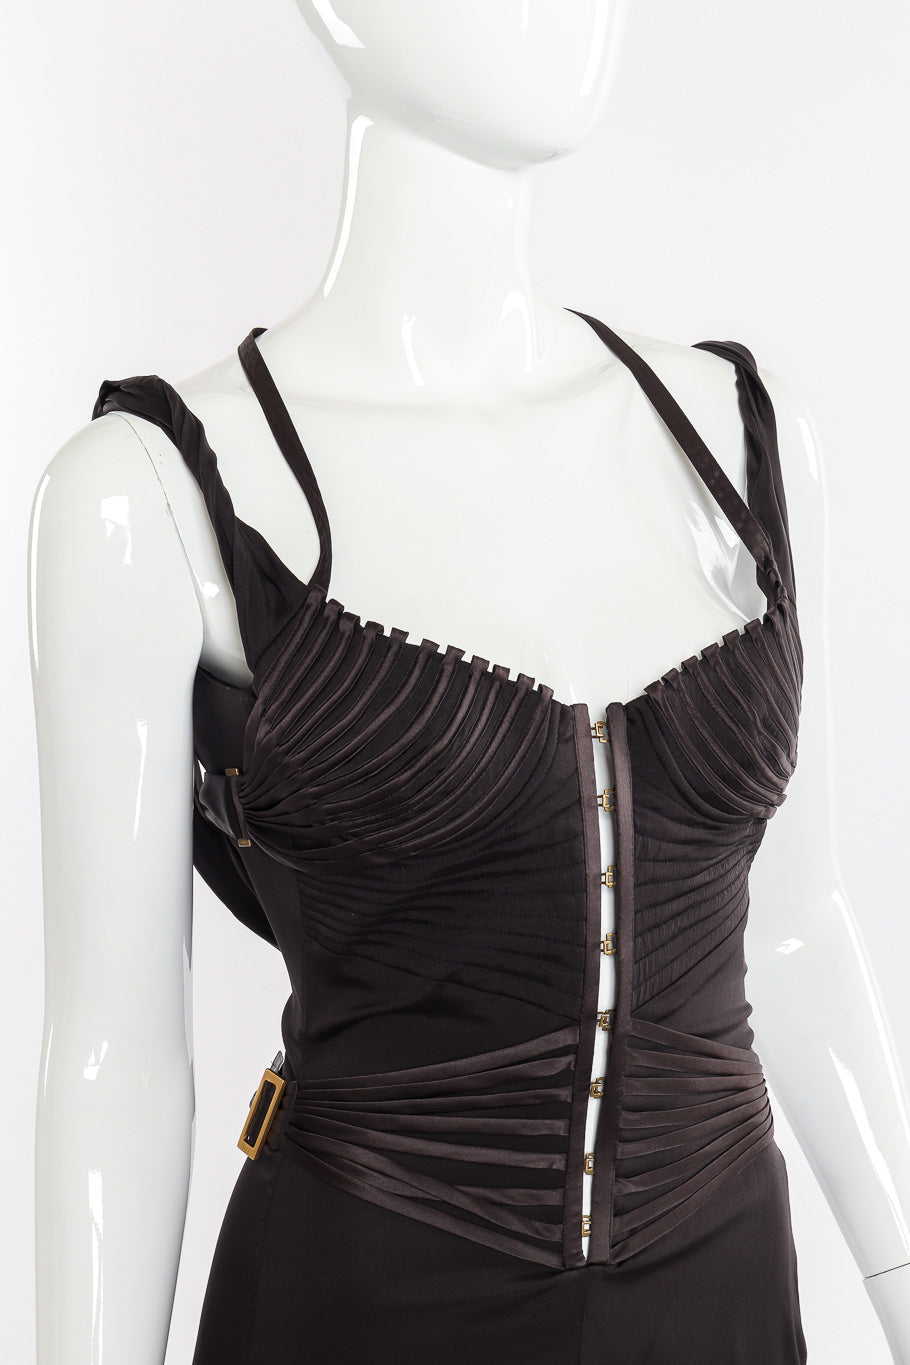 Gucci 2003 F/W Silk Corset Dress front view on mannequin closeup @Recessla